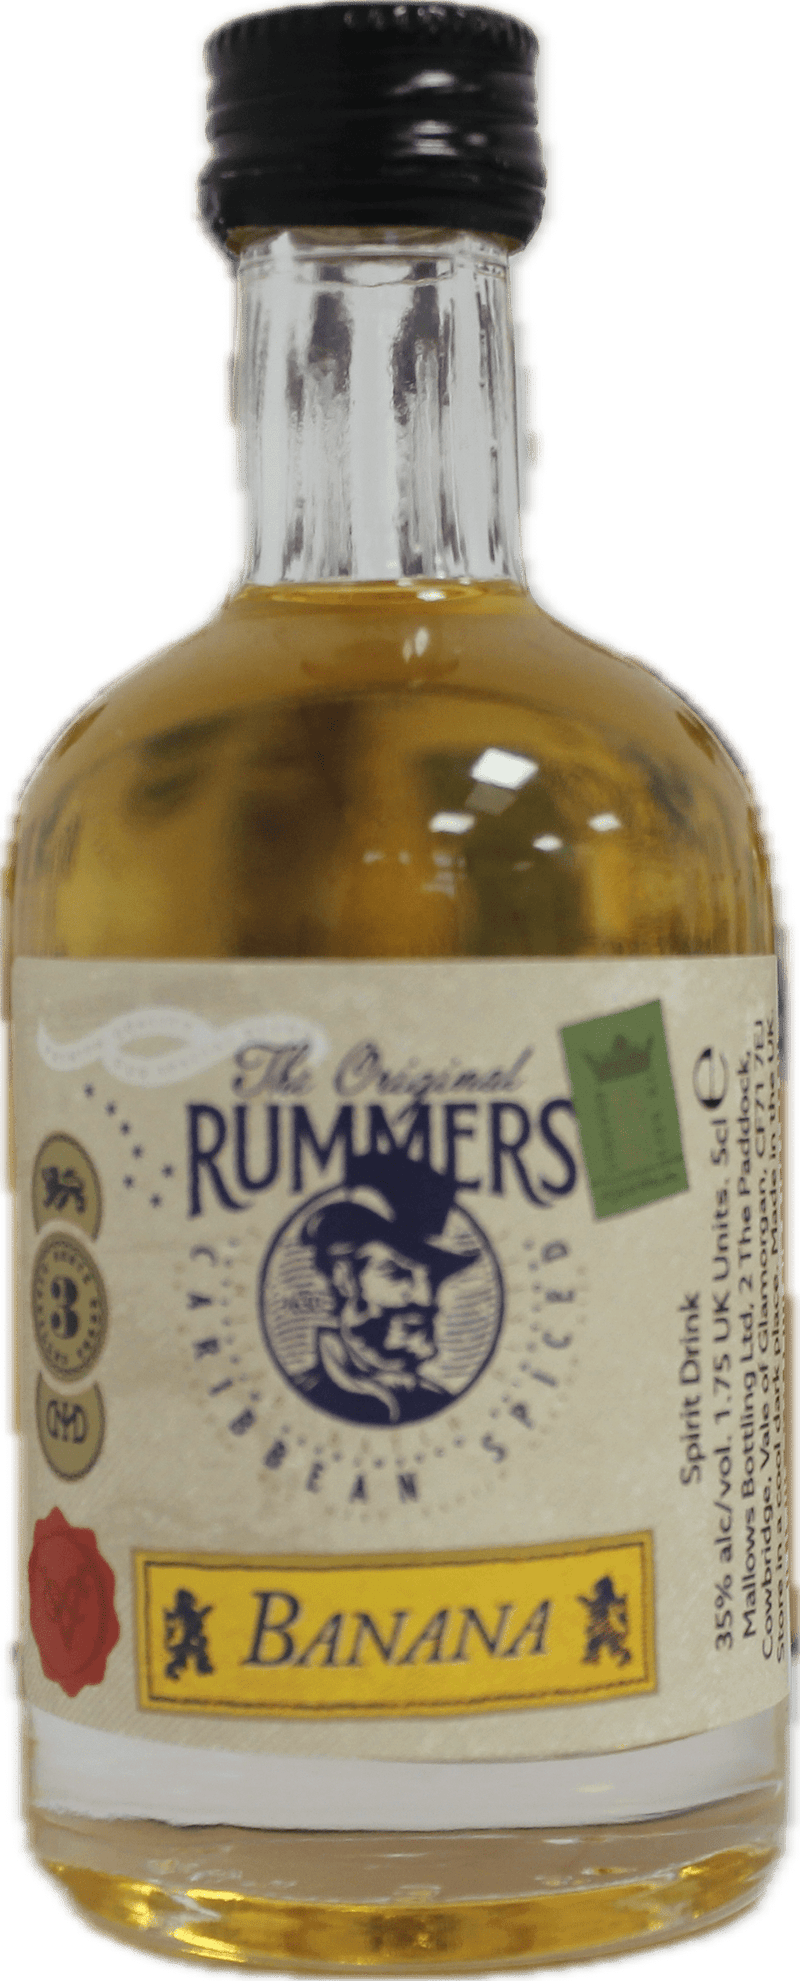 The Original Rummers Banana Rum Miniature 5cl